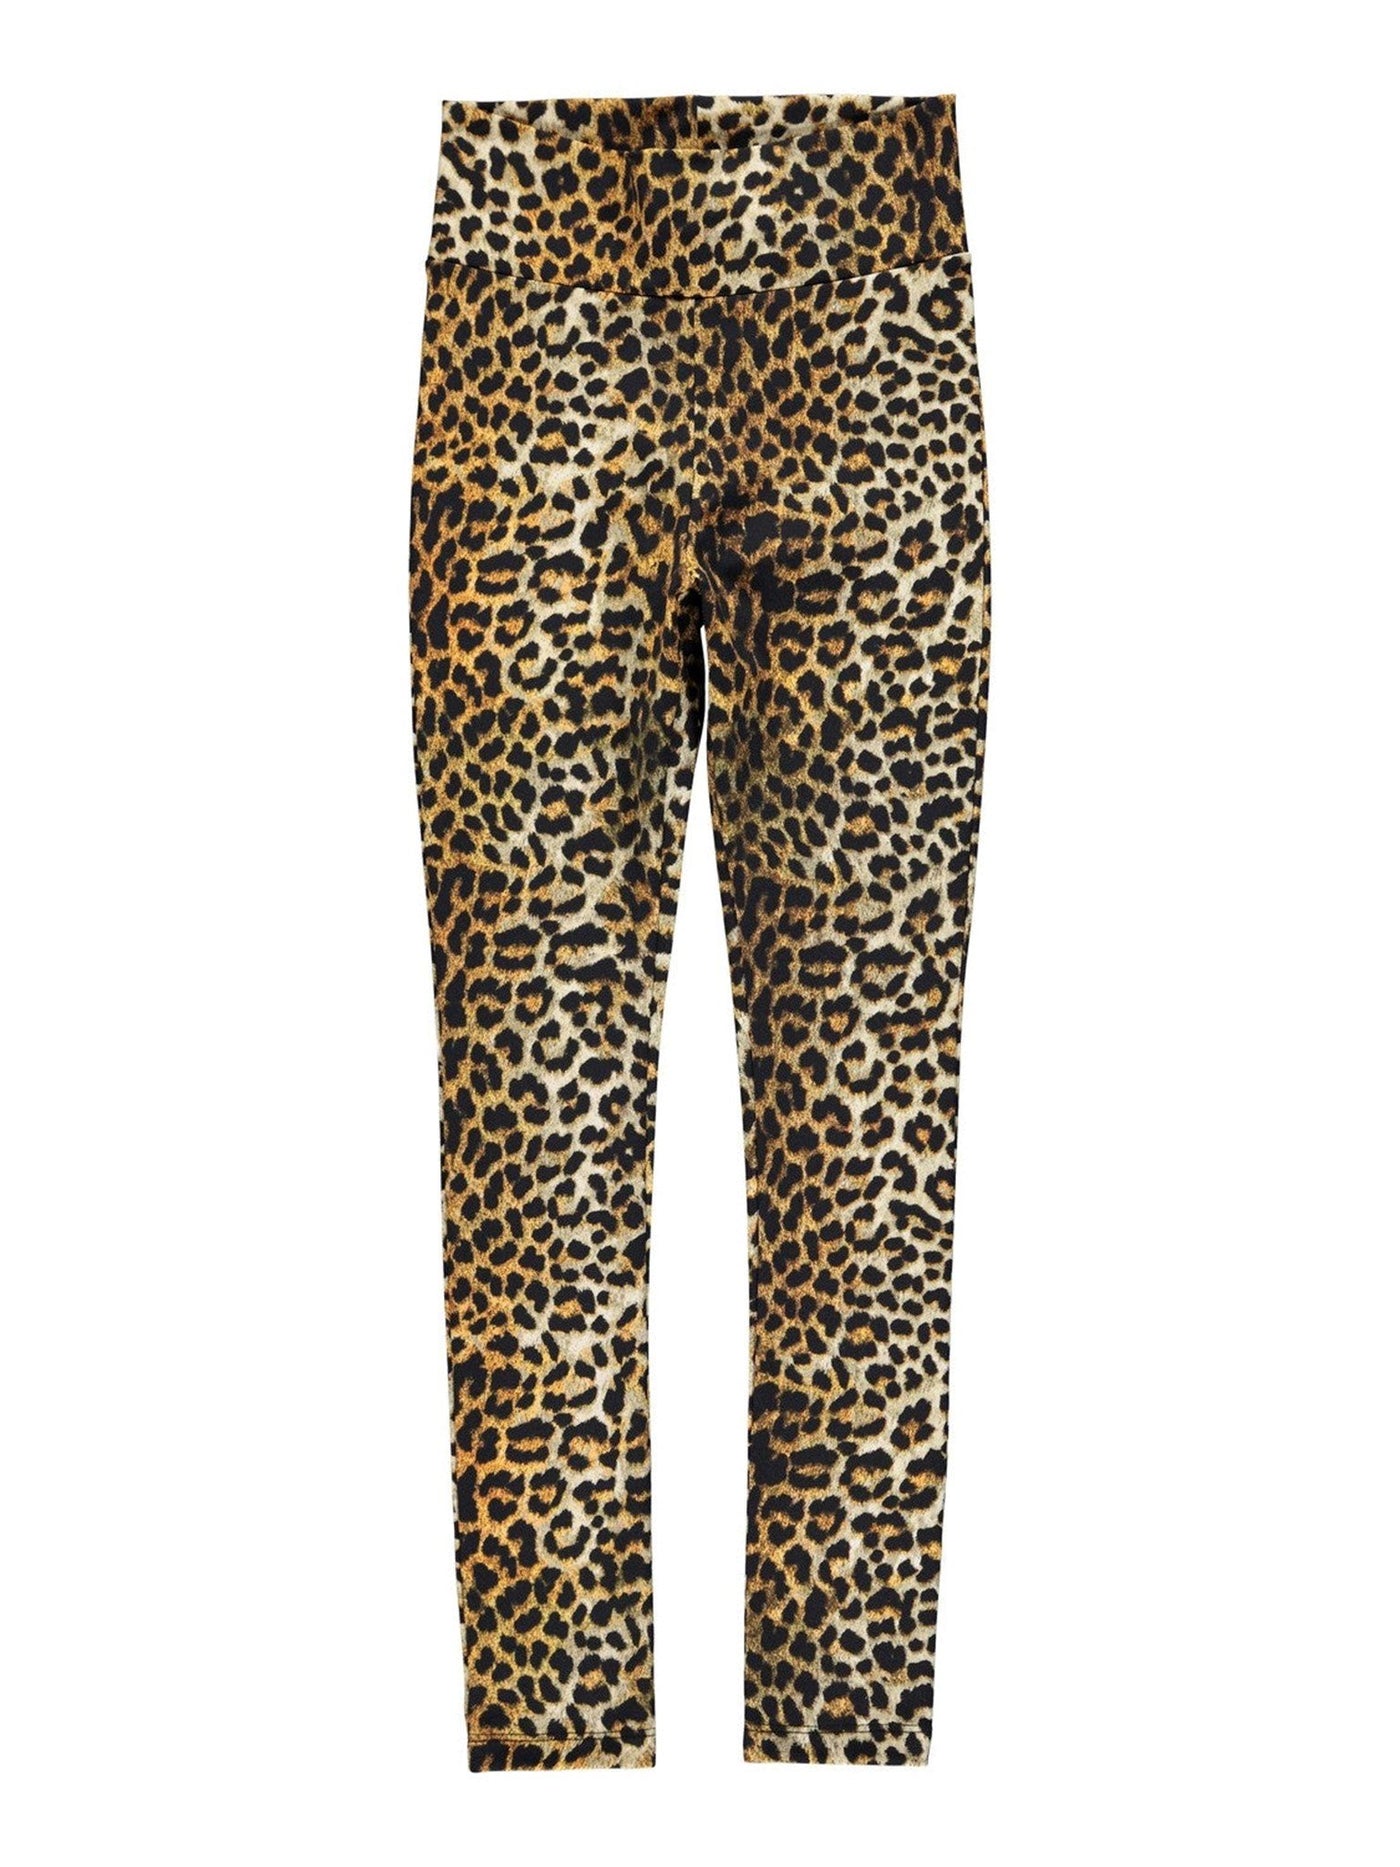 Mönstrade leggings - Leopard - Name It - Svart